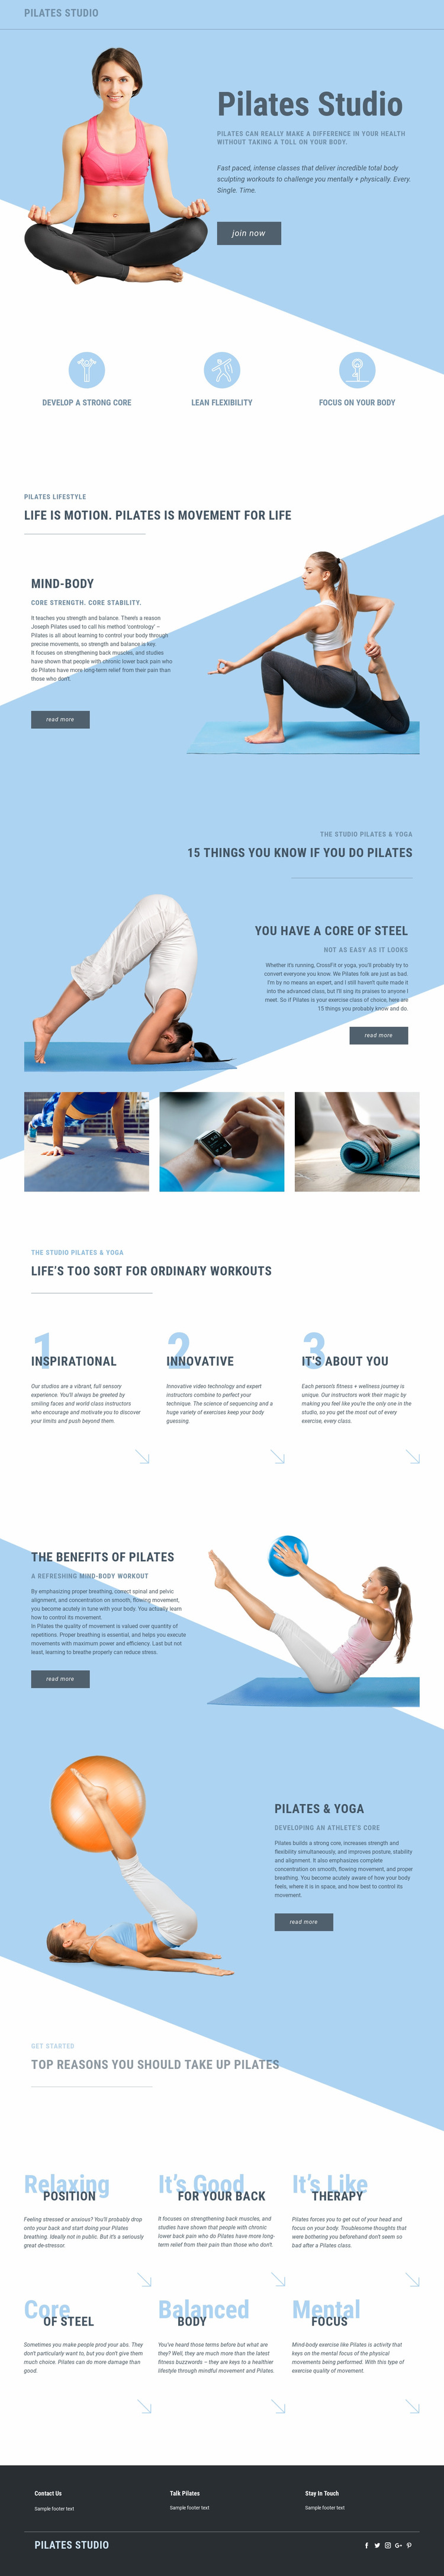 Pilates studio and sports Website Mockup